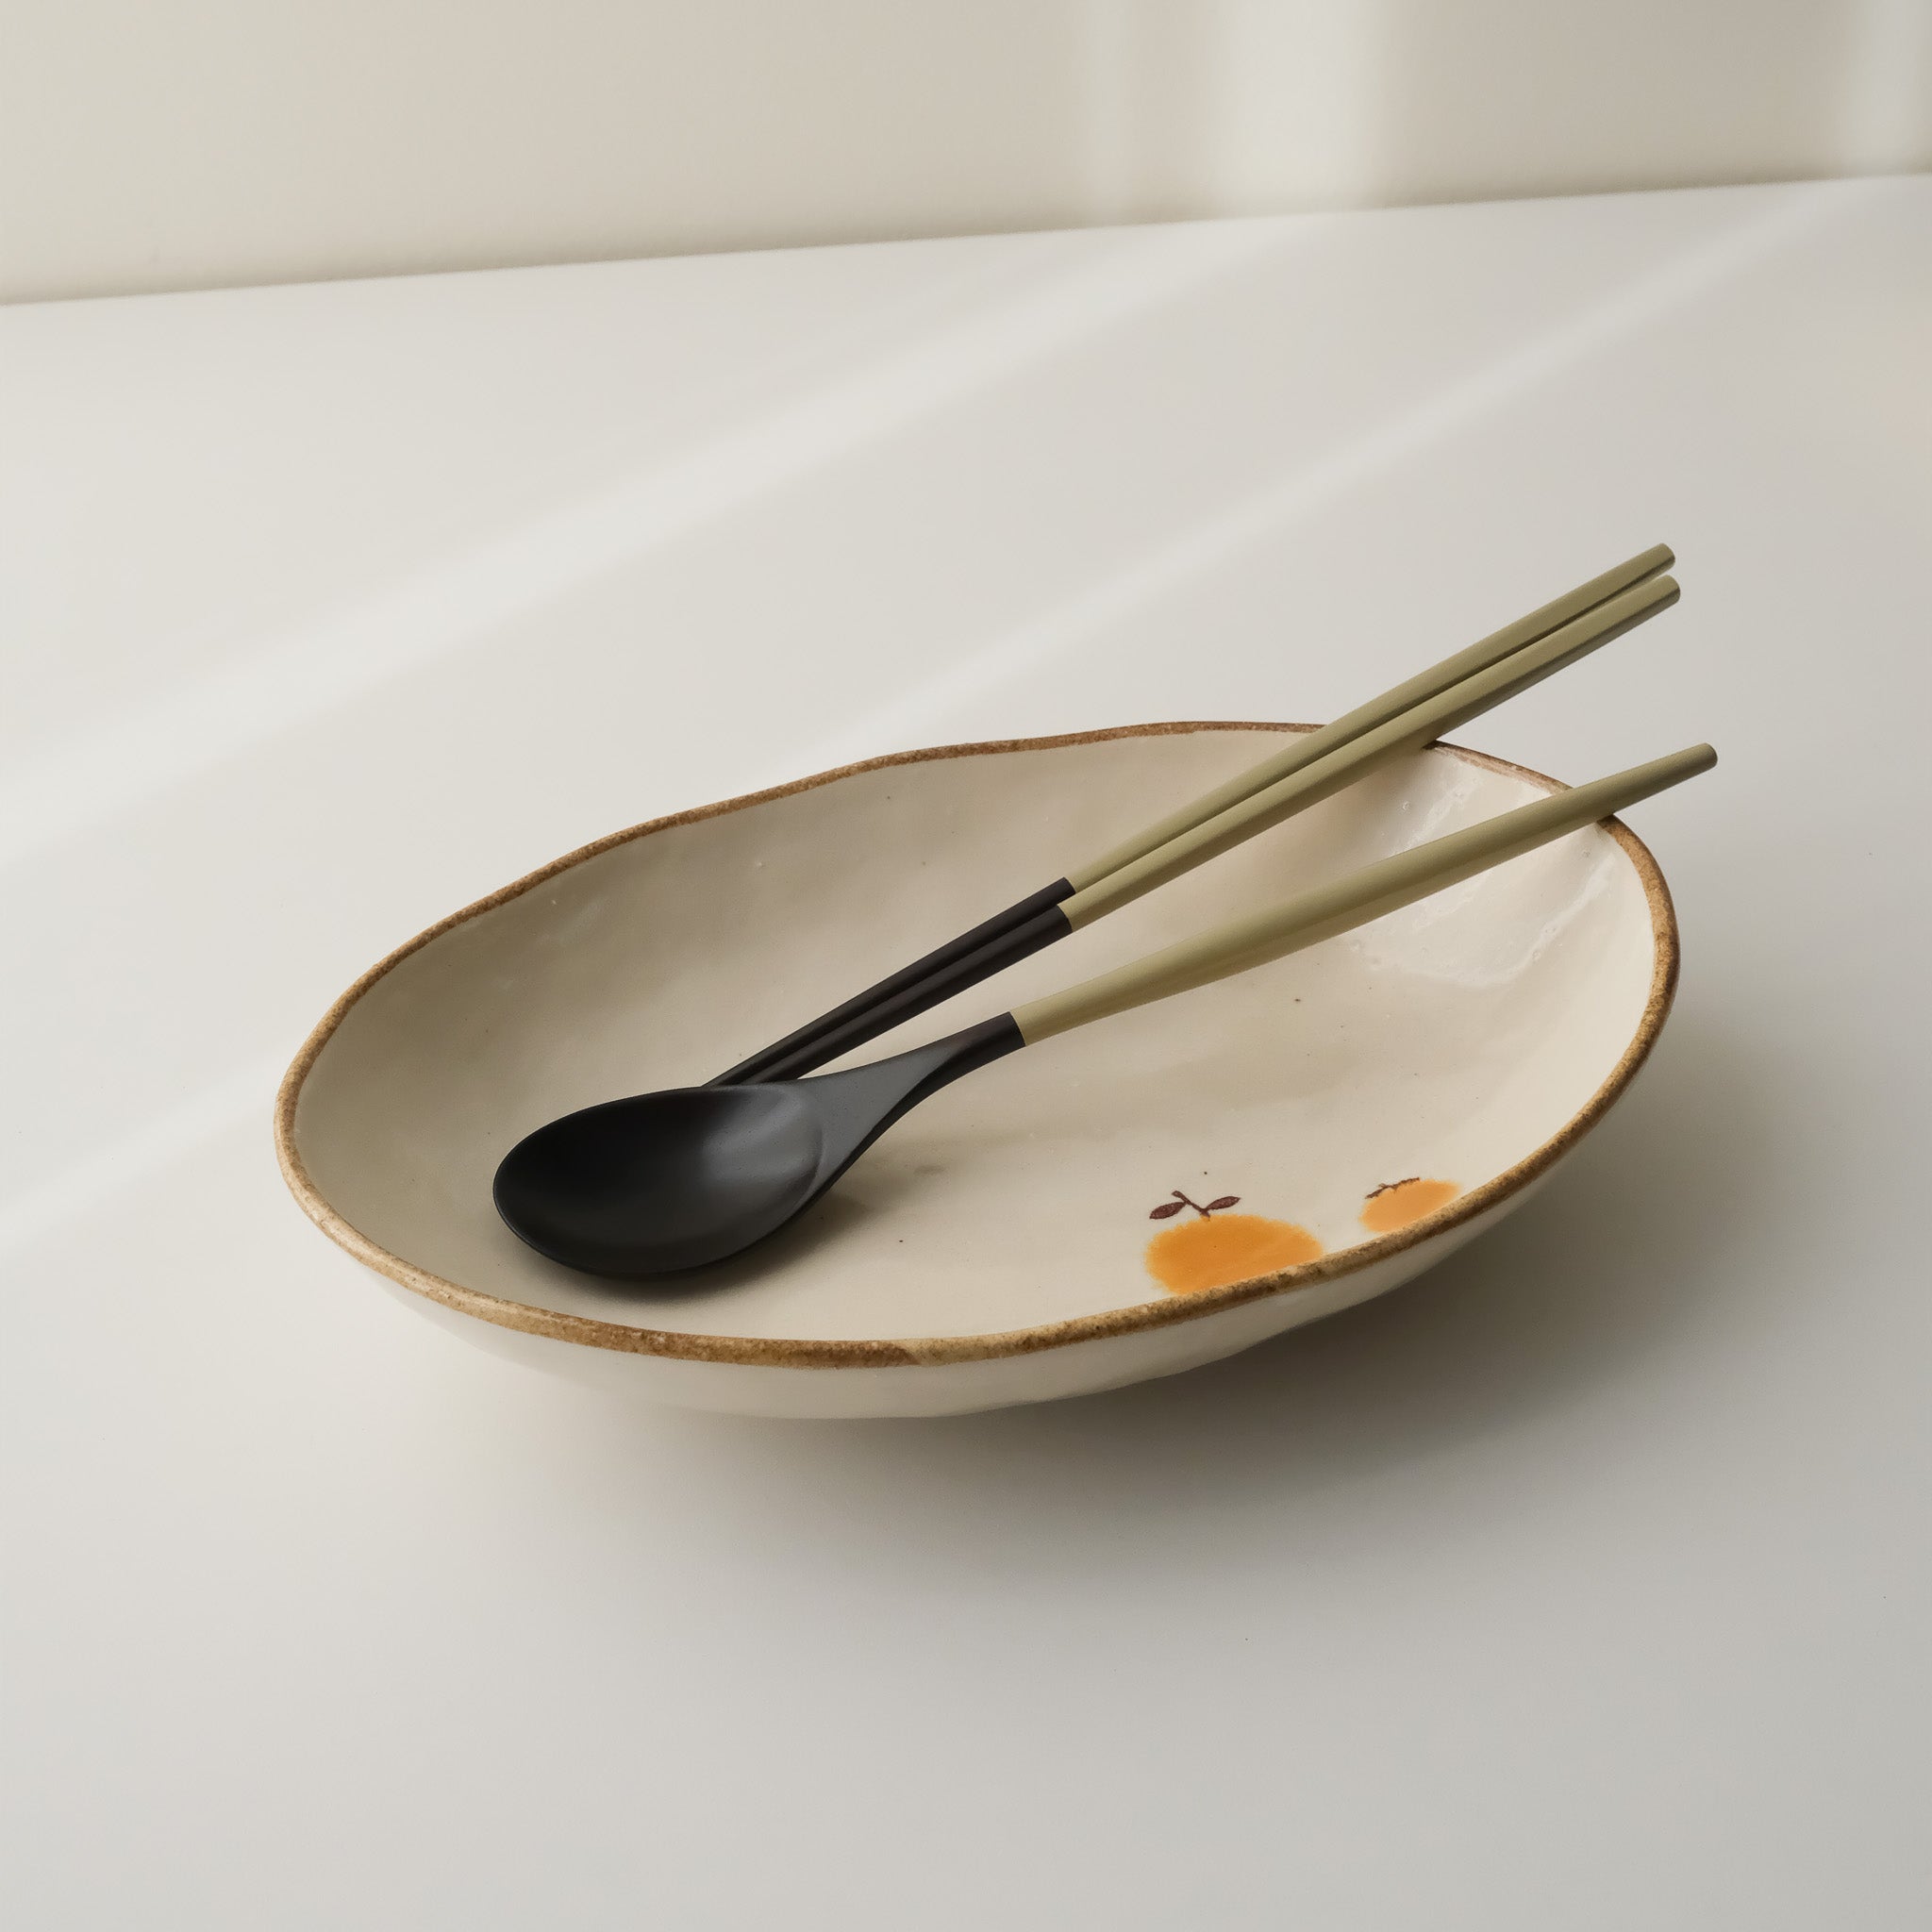 Izawa Handmade Oval Deep Dish